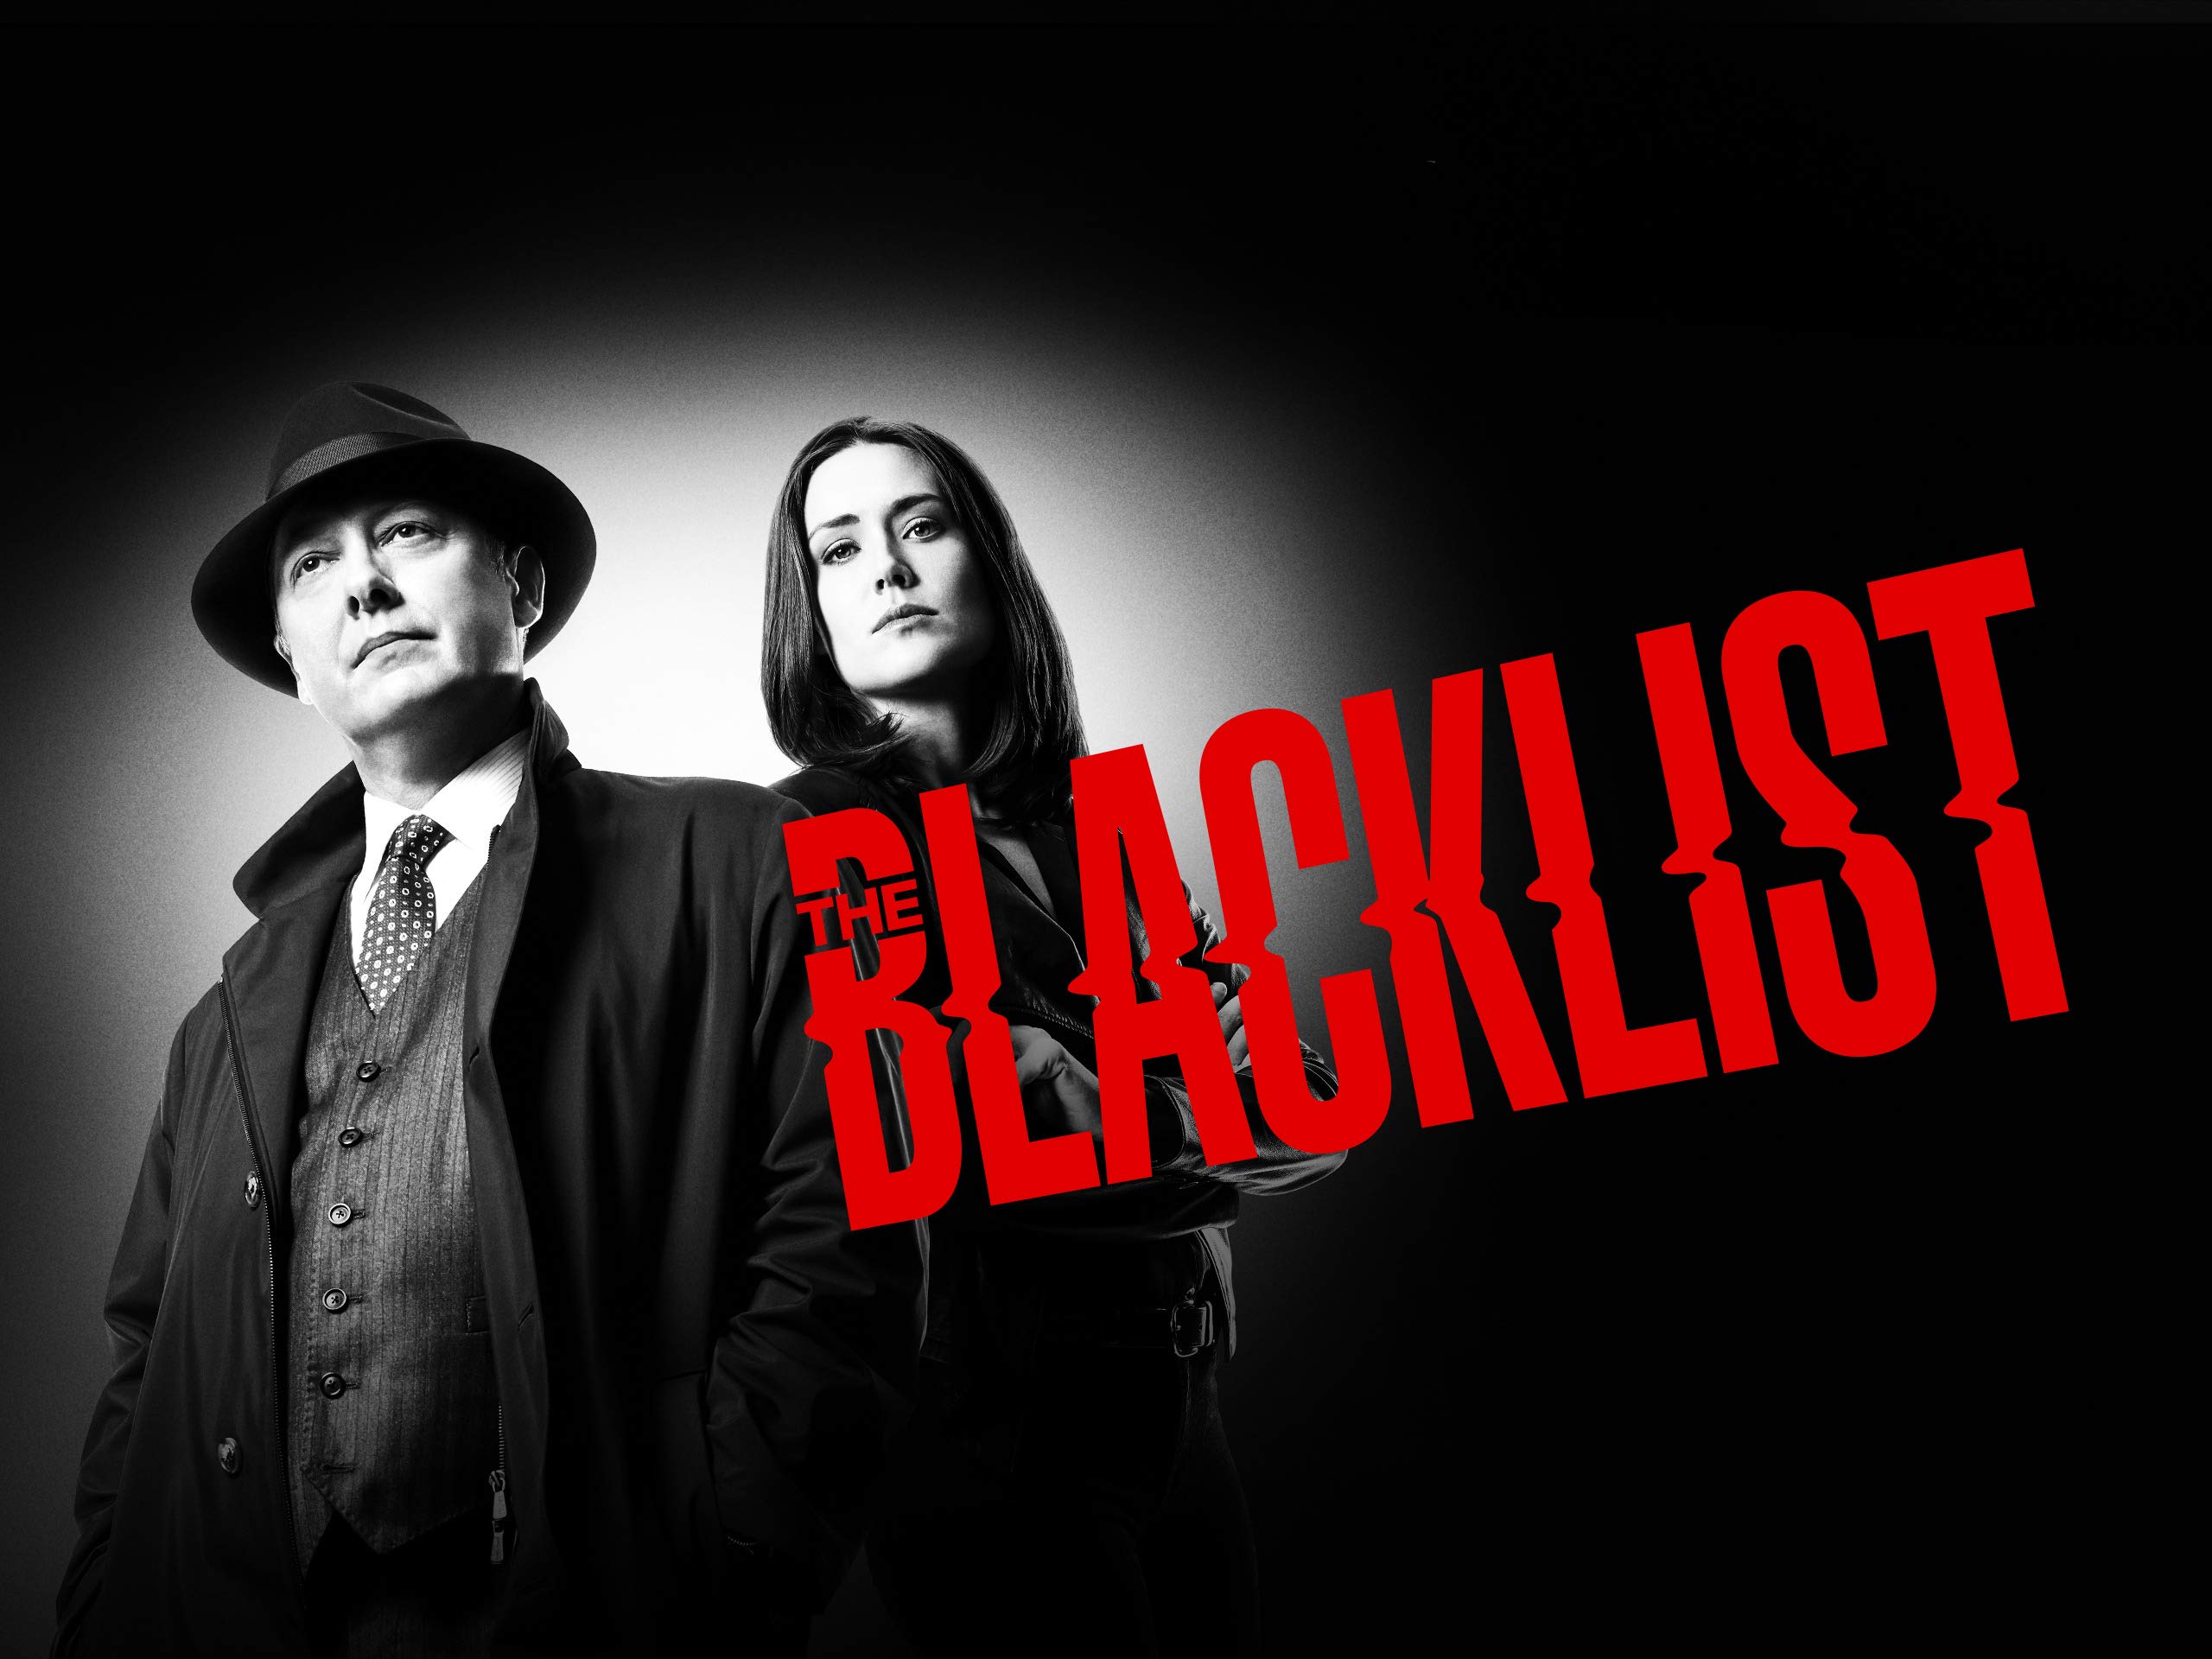 Laila robins blacklist